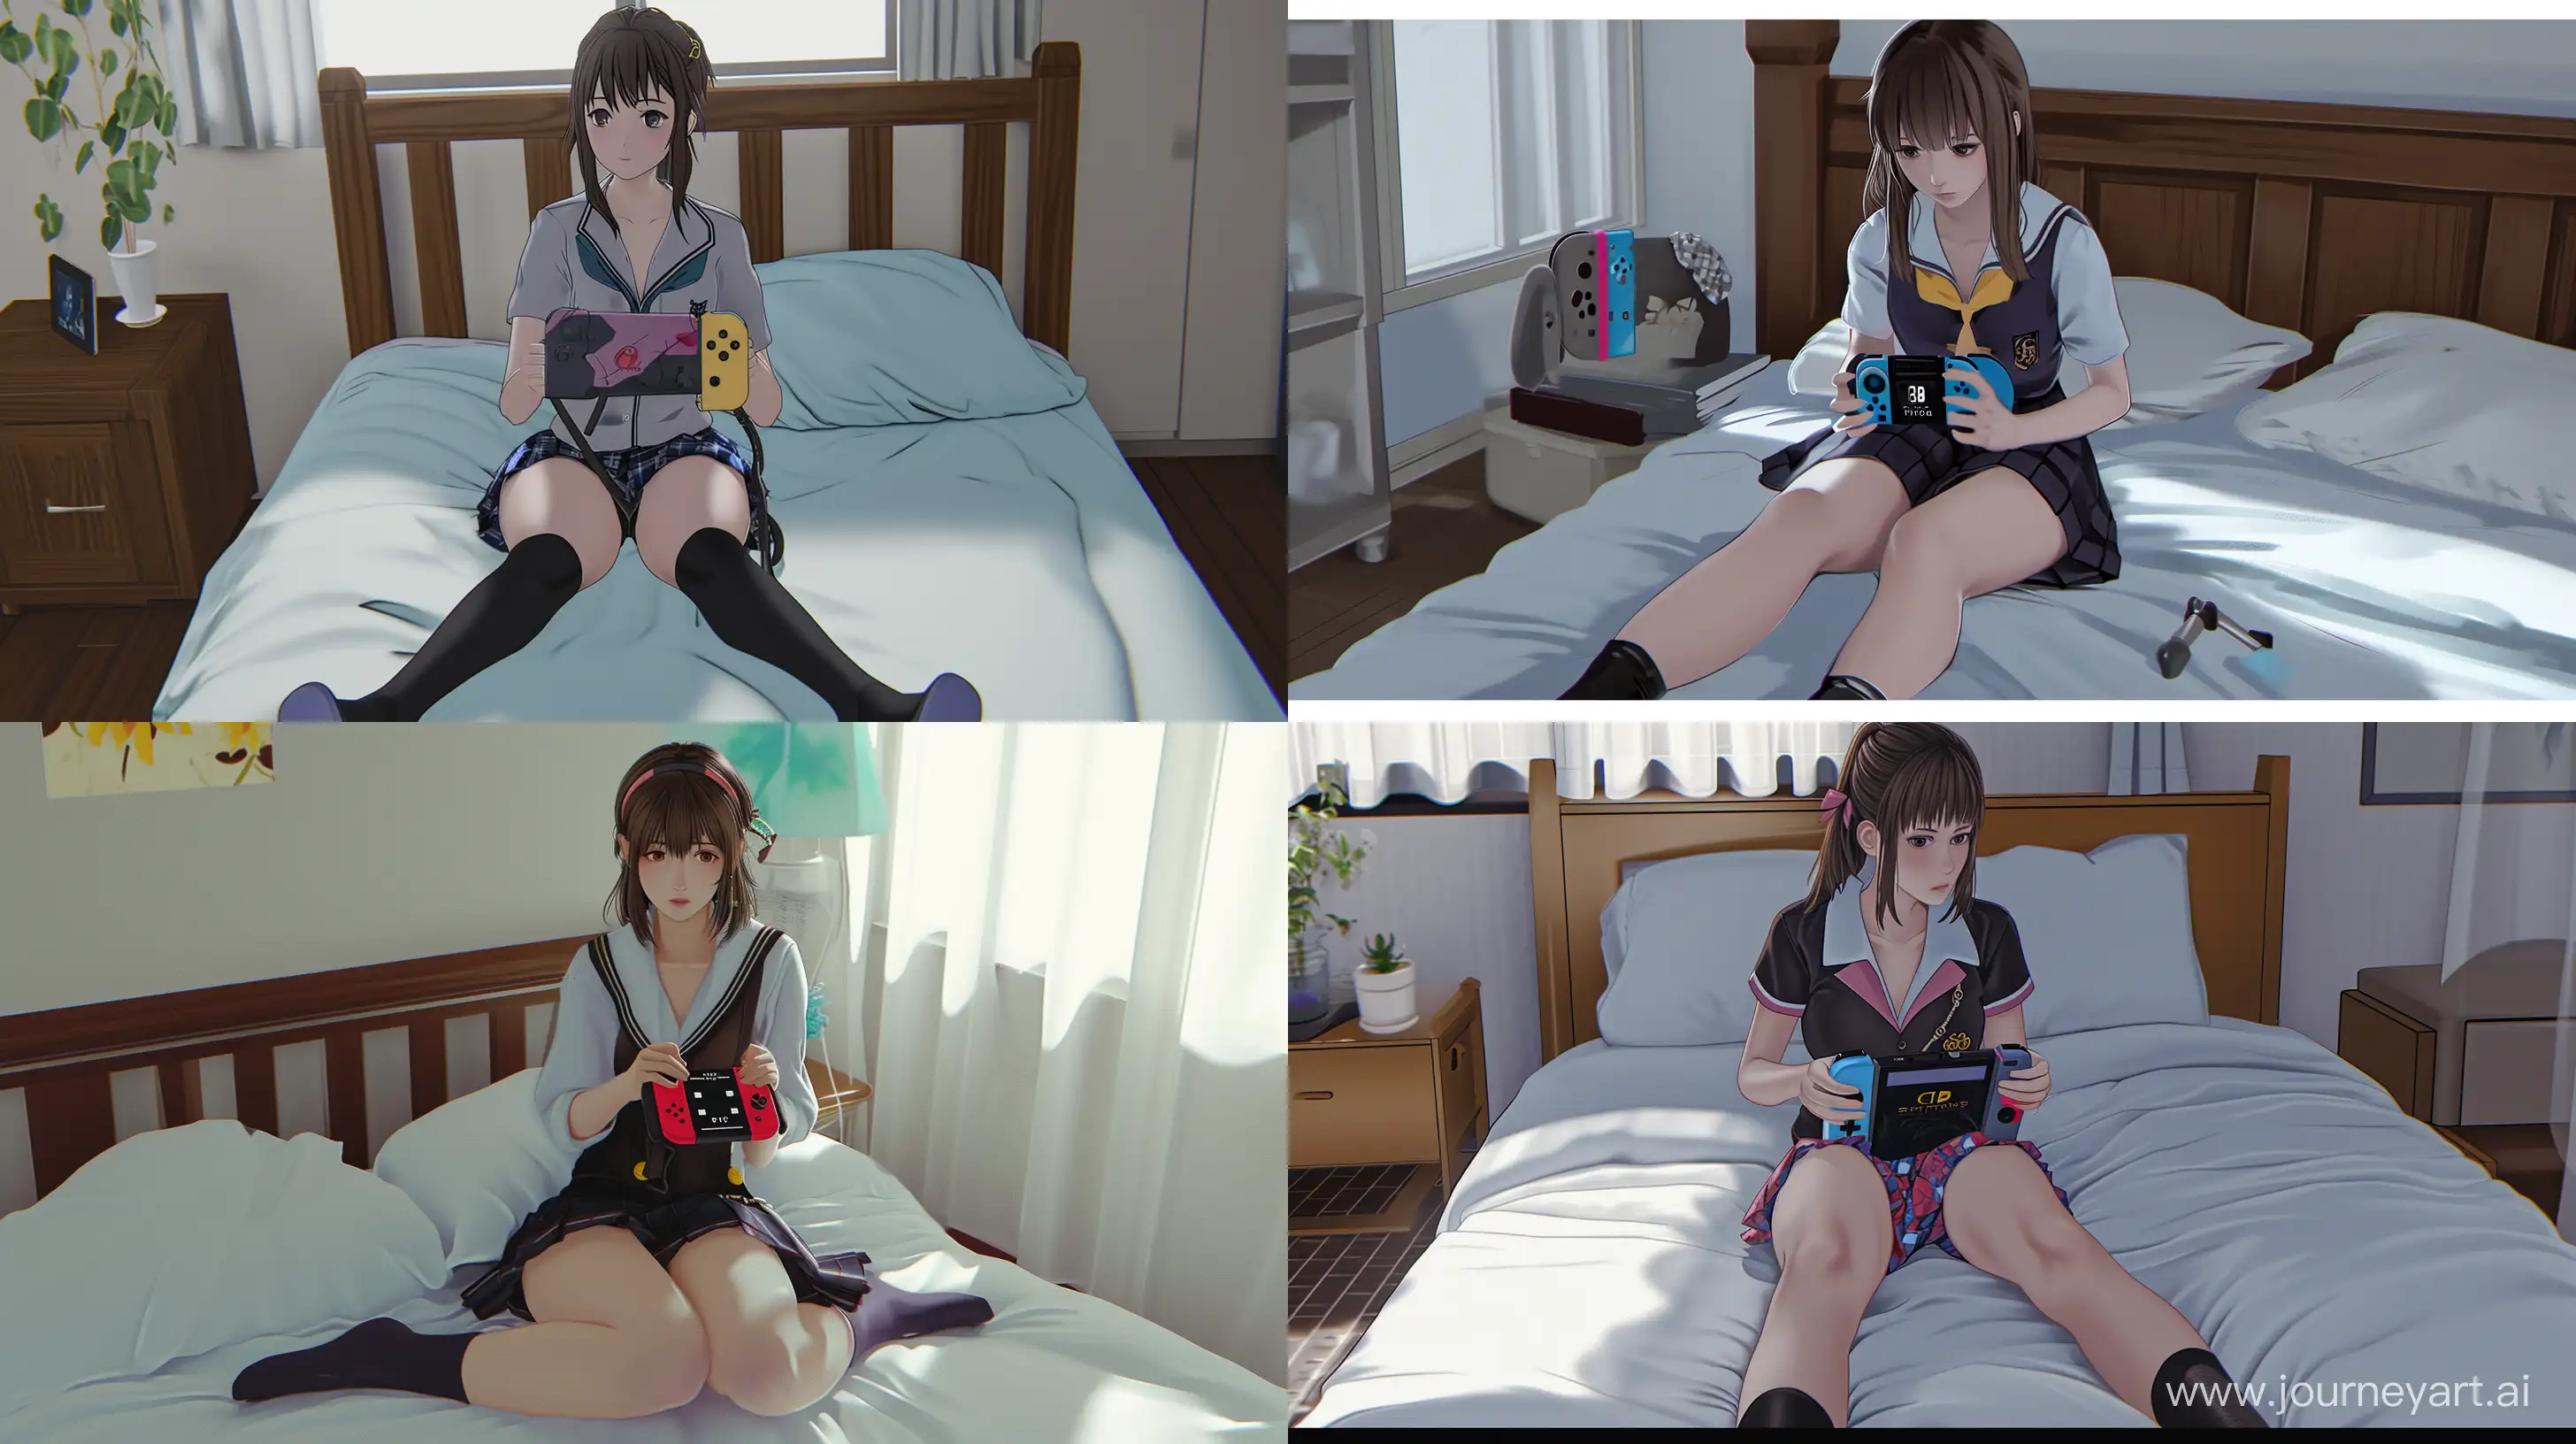 Schoolgirl-Playing-Nintendo-Switch-in-Anime-Style